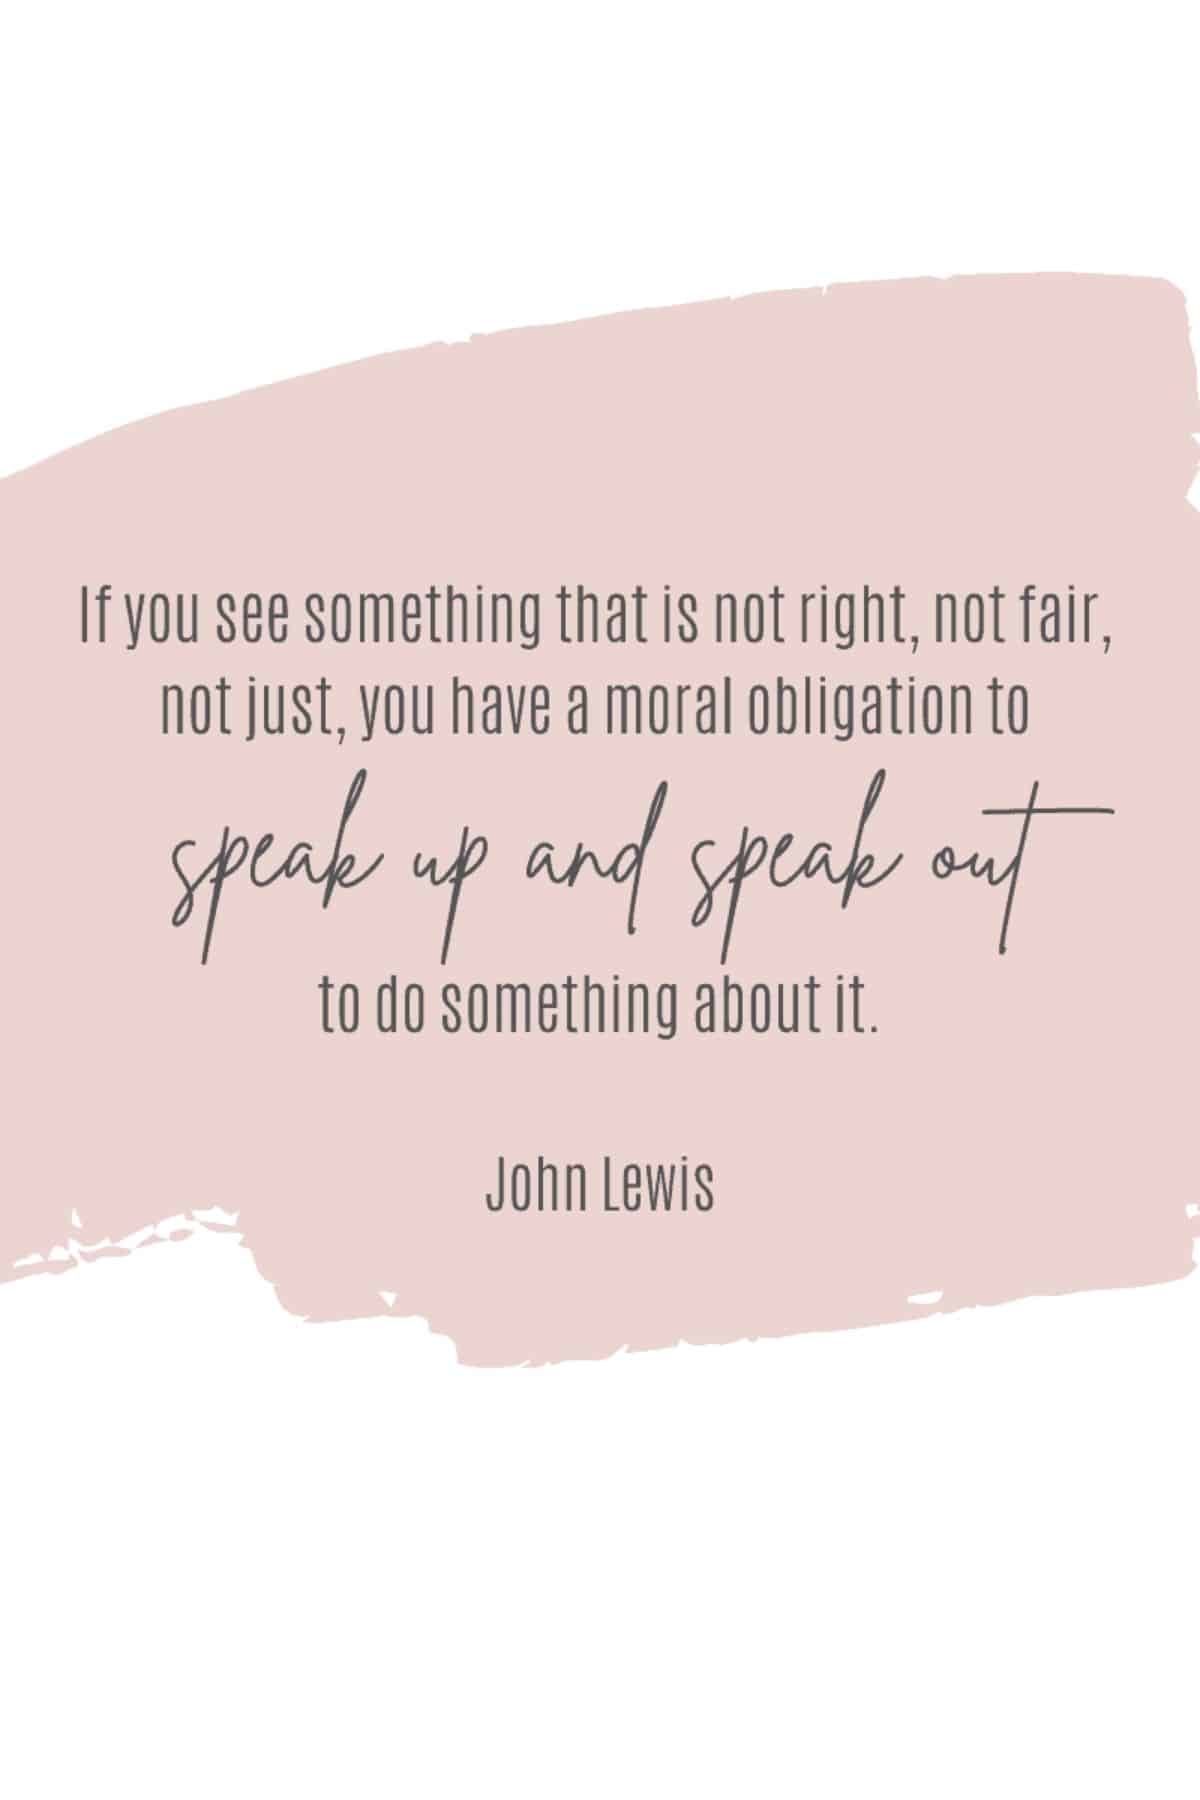 "speak up" quote from John Lewis